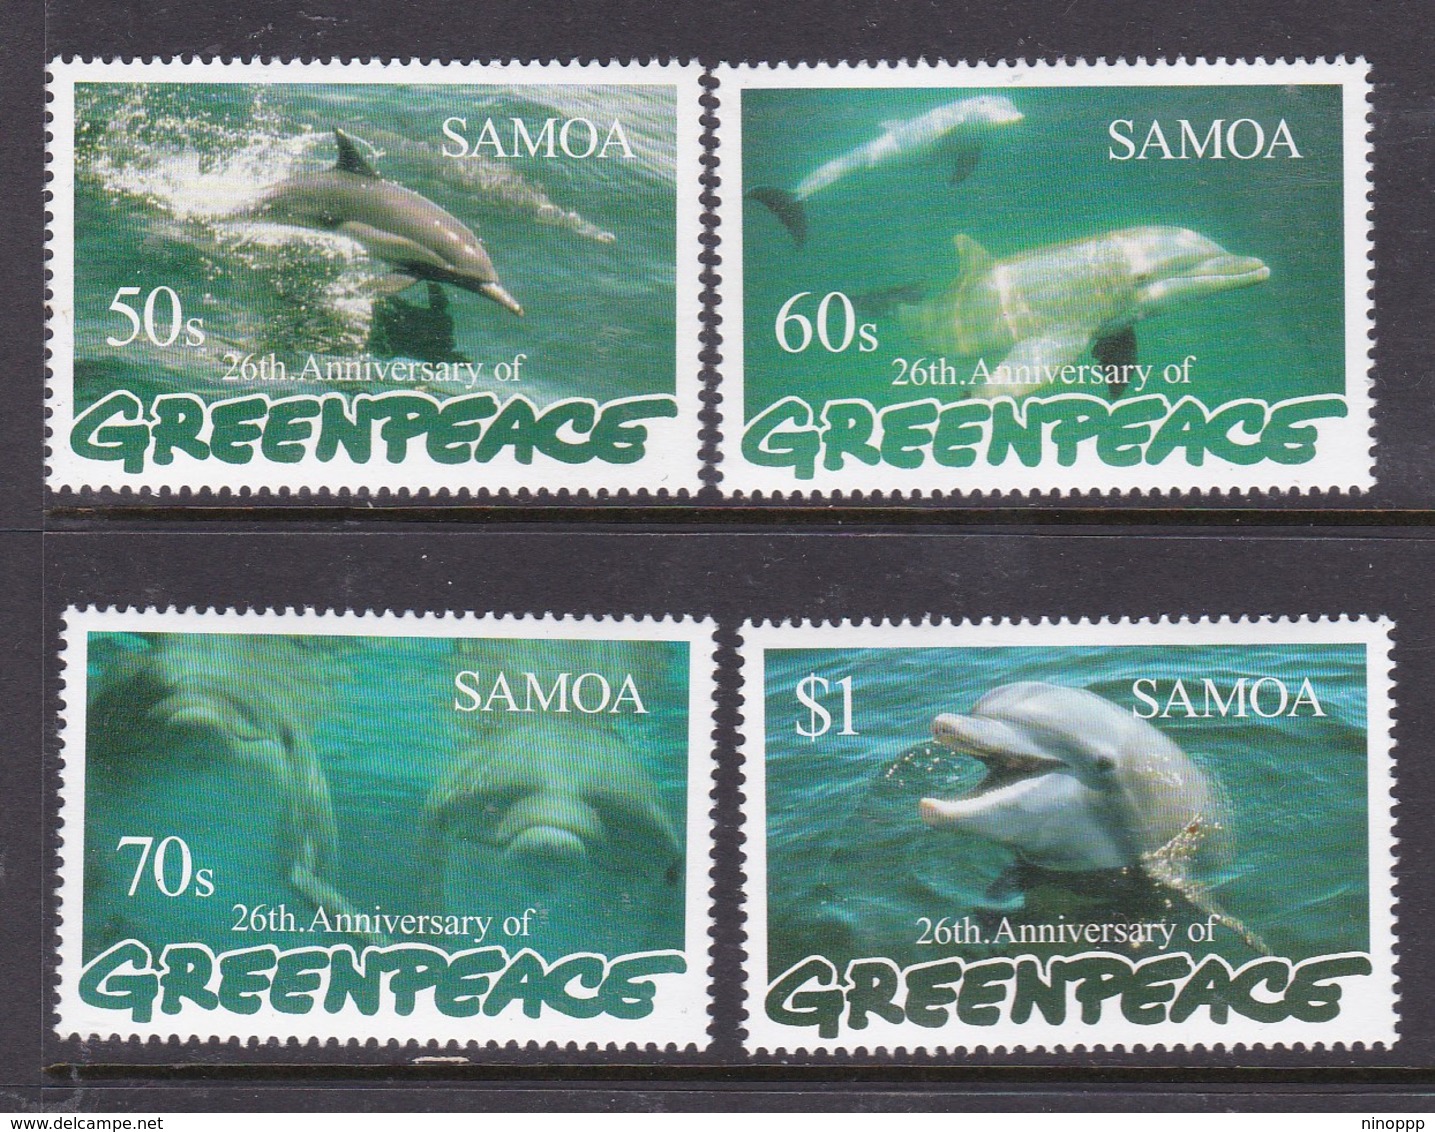 Samoa SG 1014-1017 1997 Greenpeace  26th Anniversary,mint Never Hinged - Samoa